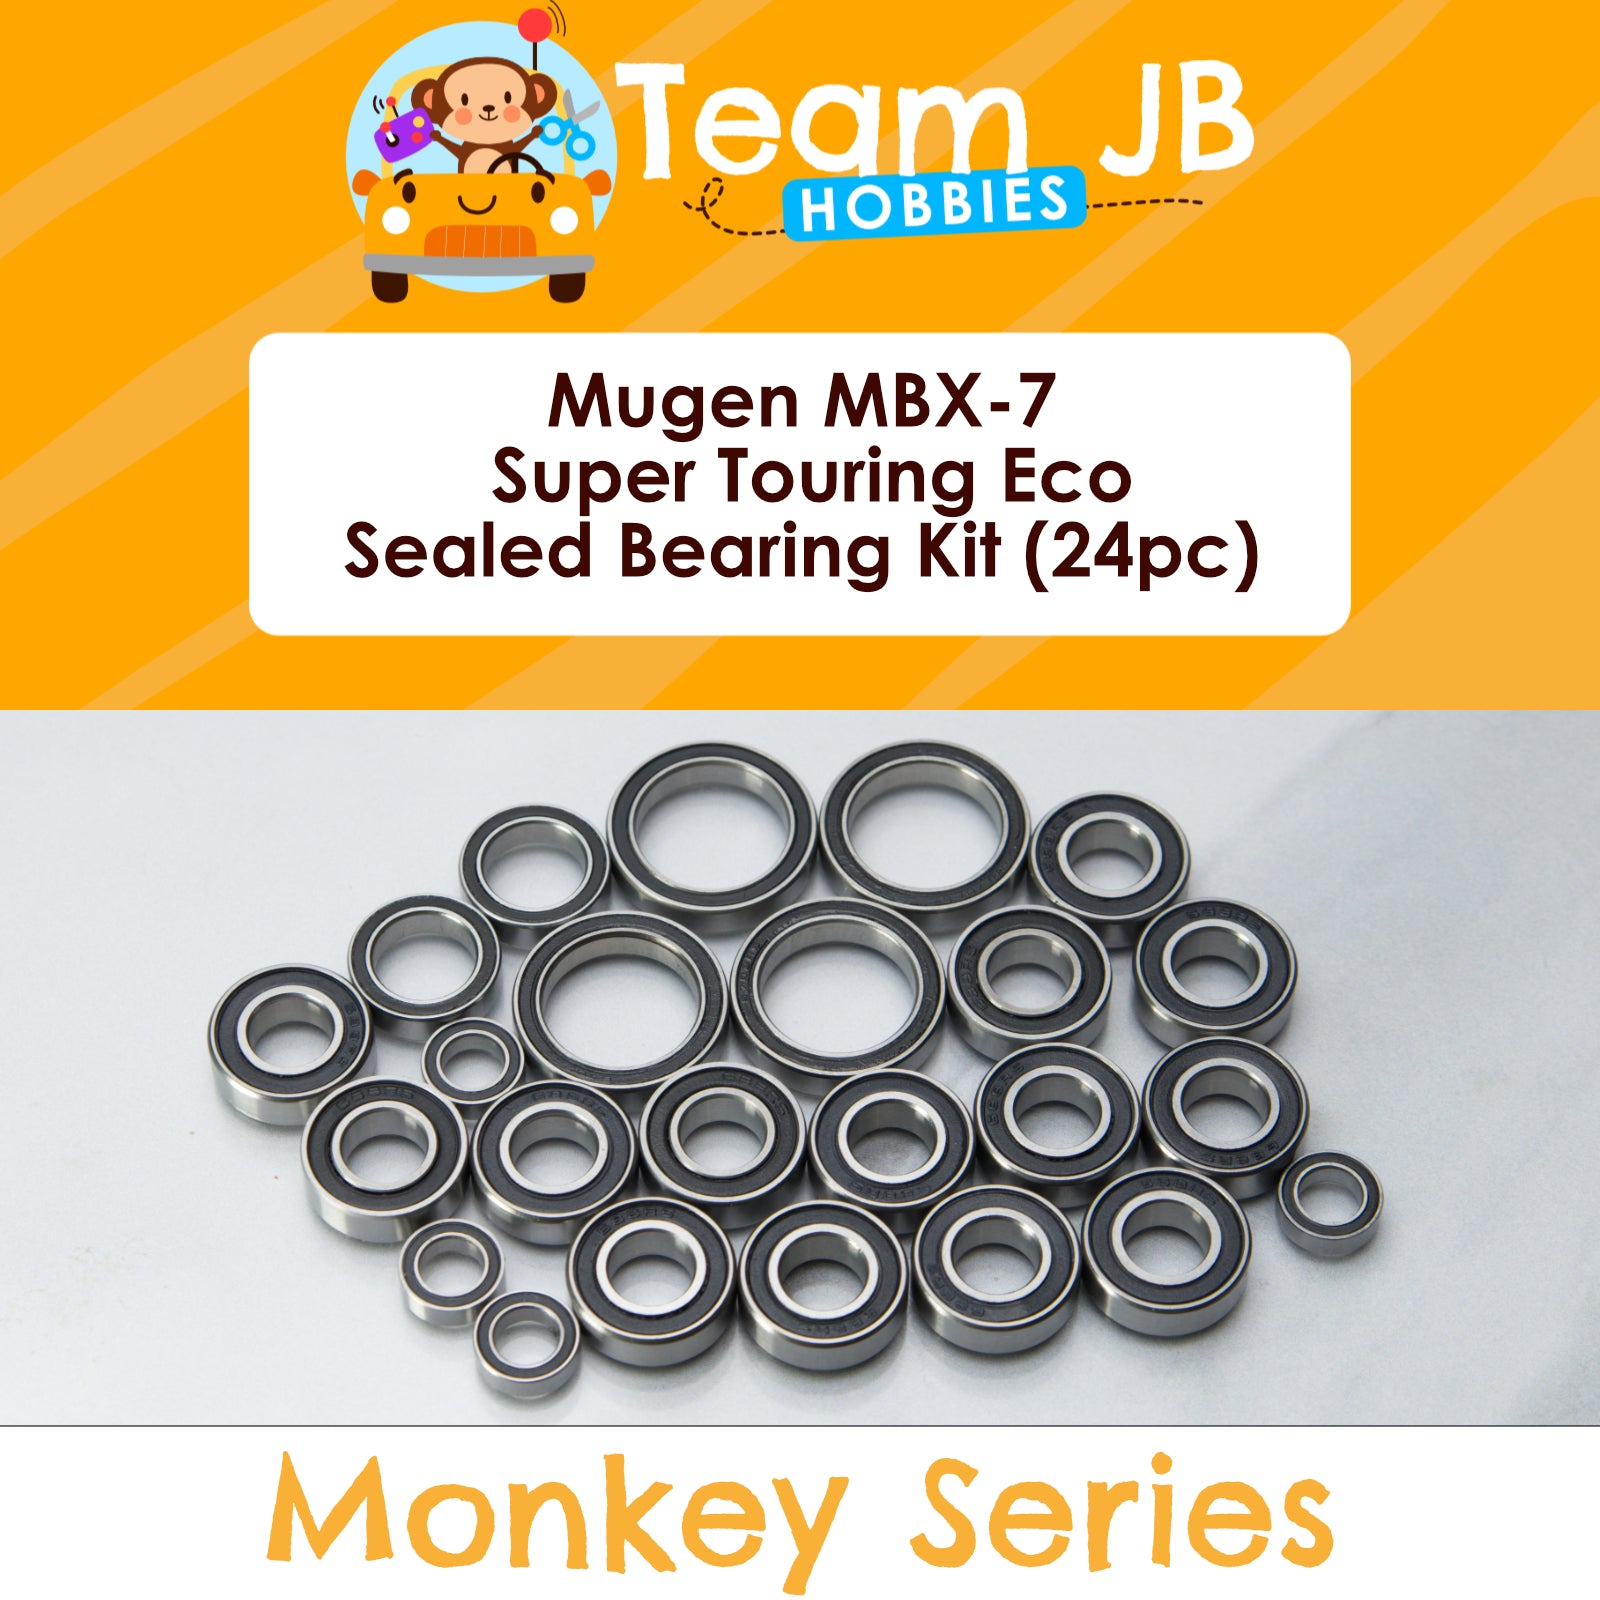 Mugen MBX-7 Super Touring Eco - Sealed Bearing Kit